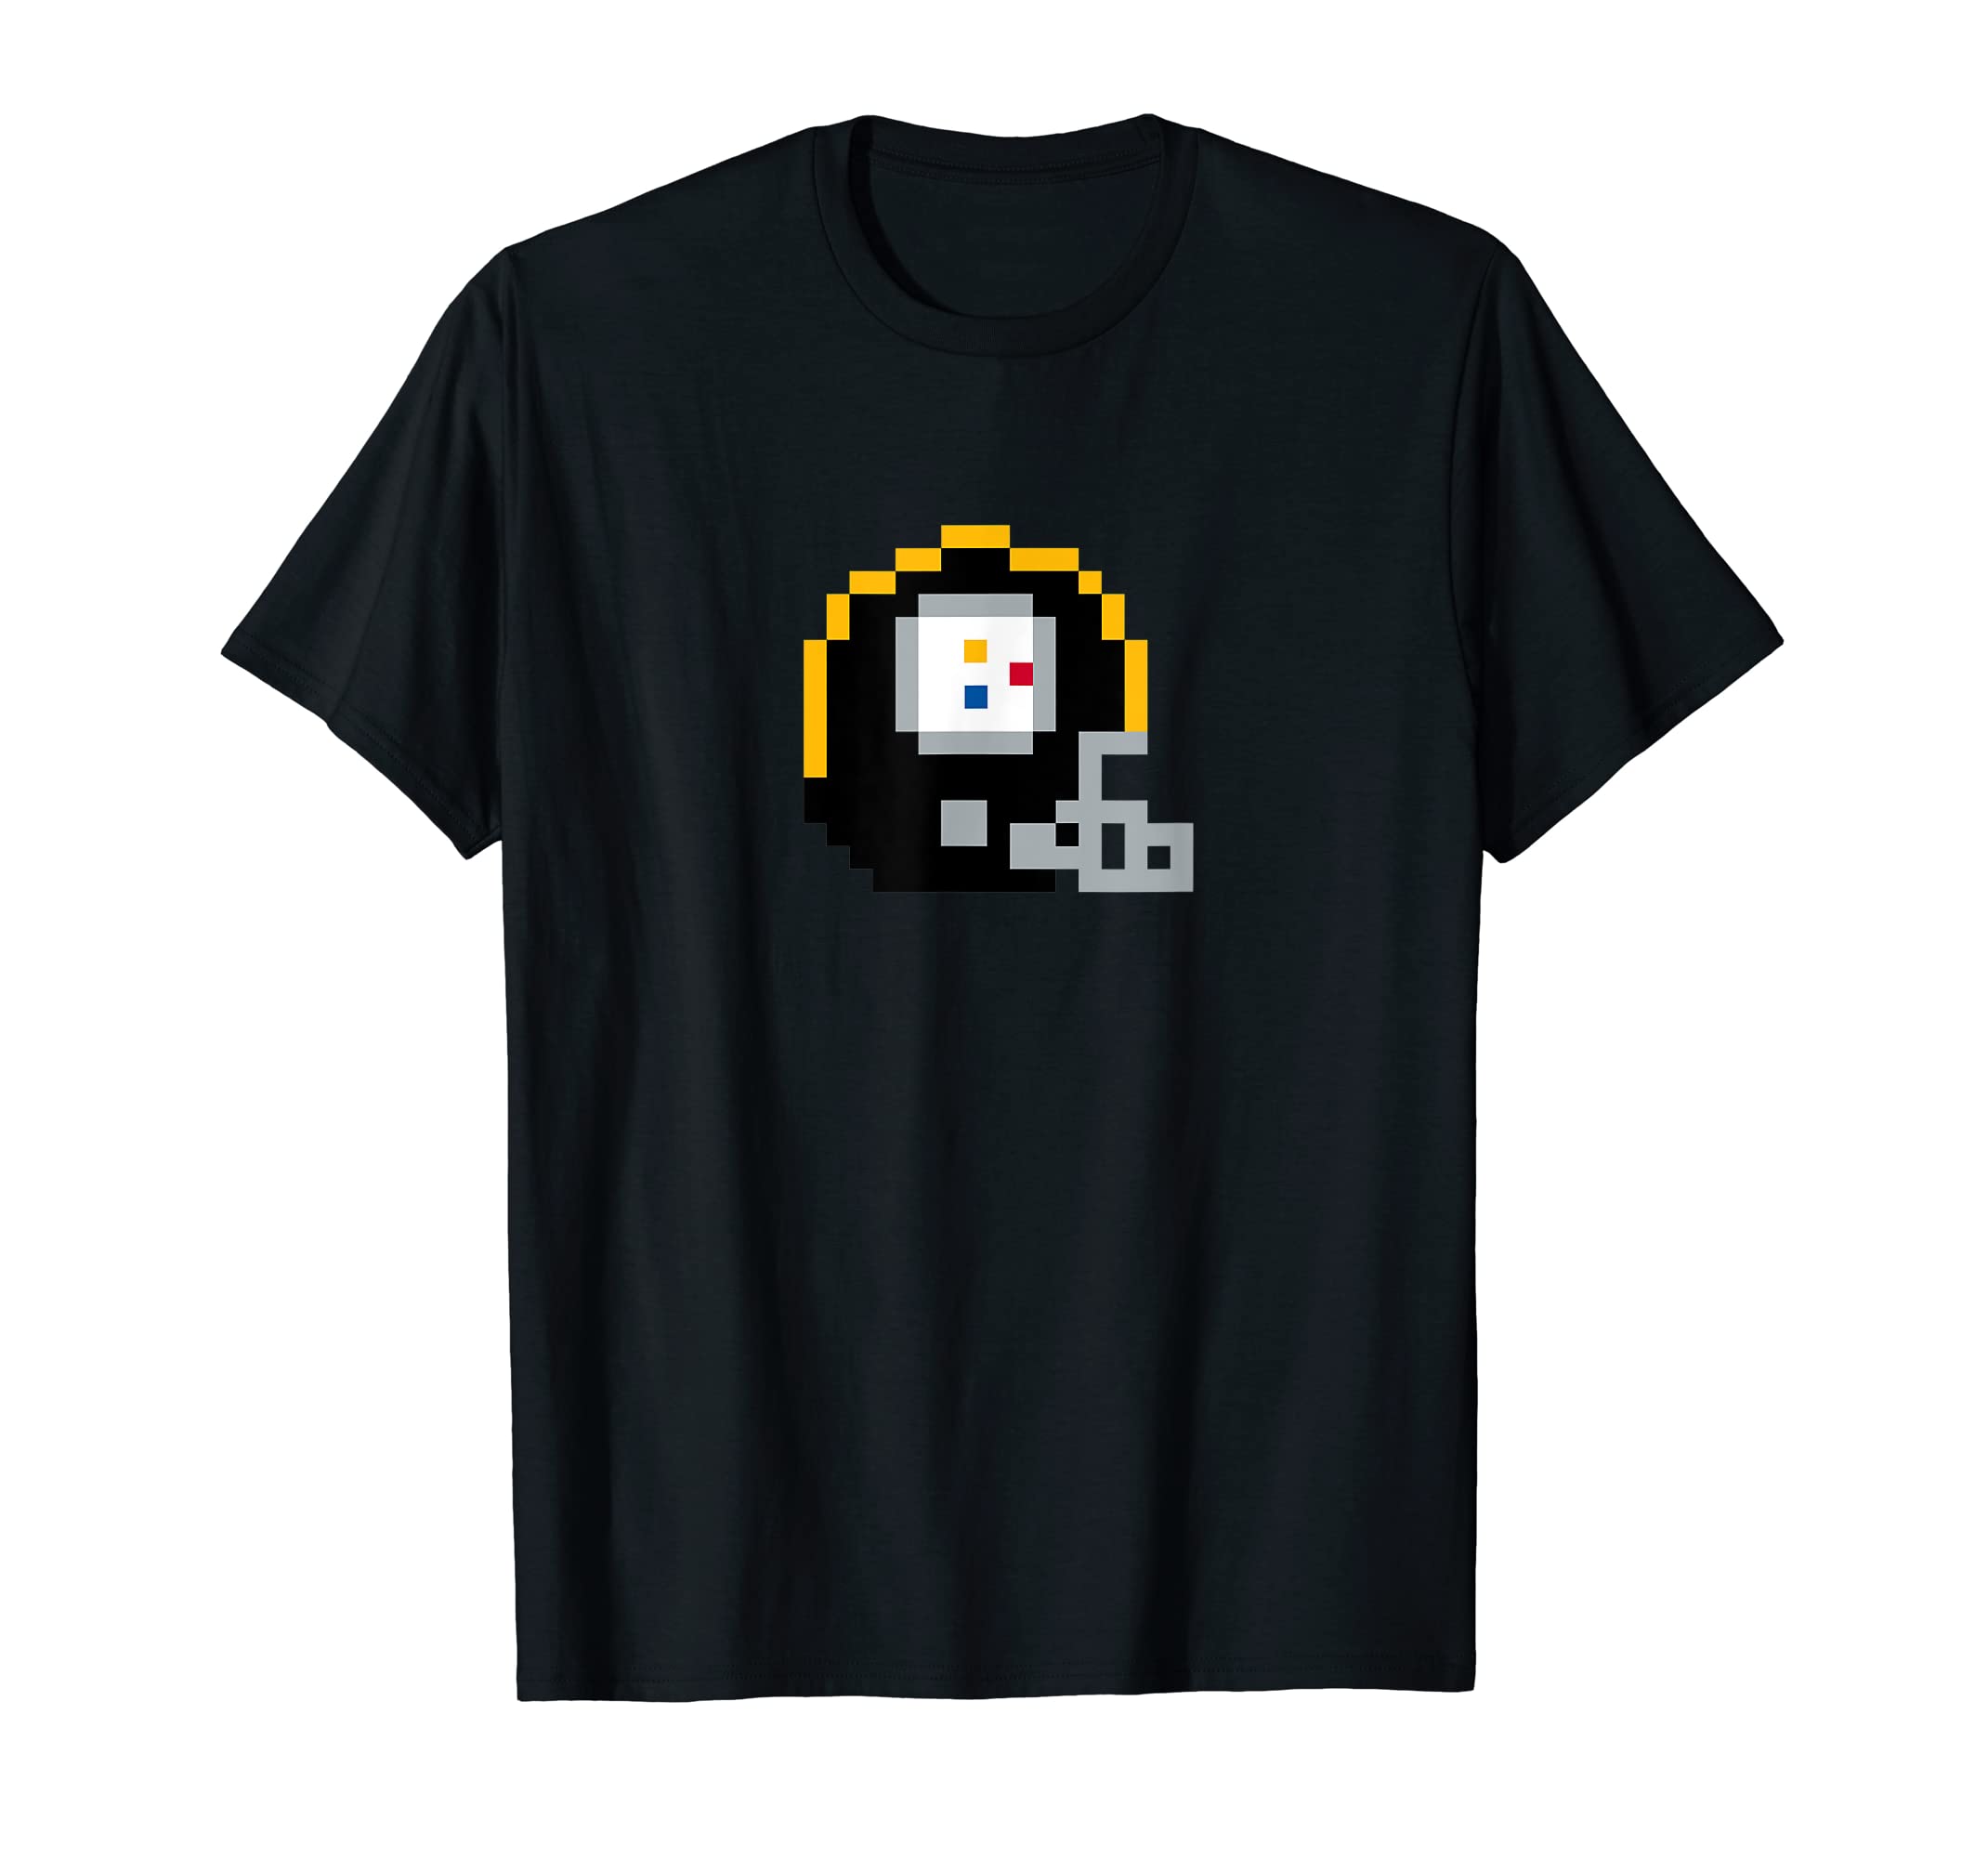 Retro 8-Bit Video Game Pittsburgh Steelers Football Helmet T-Shirt